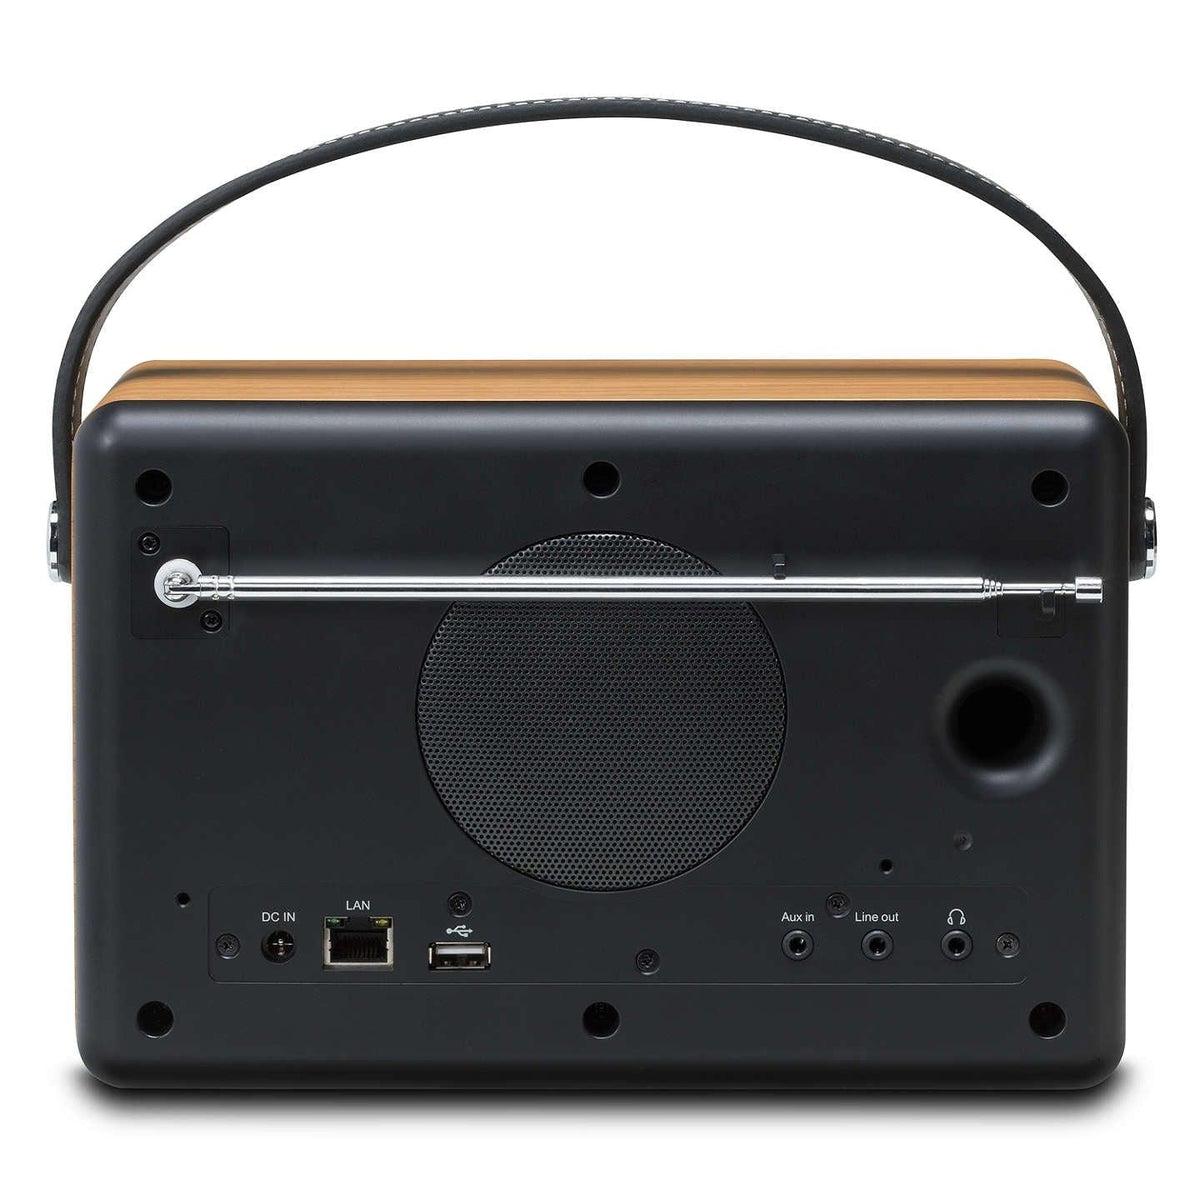 Robert Stream DAB+/DAB/FM/Internet Smart Radio with Bluetooth - Black &amp; Wood | STREAM941 from DID Electrical - guaranteed Irish, guaranteed quality service. (6890780623036)